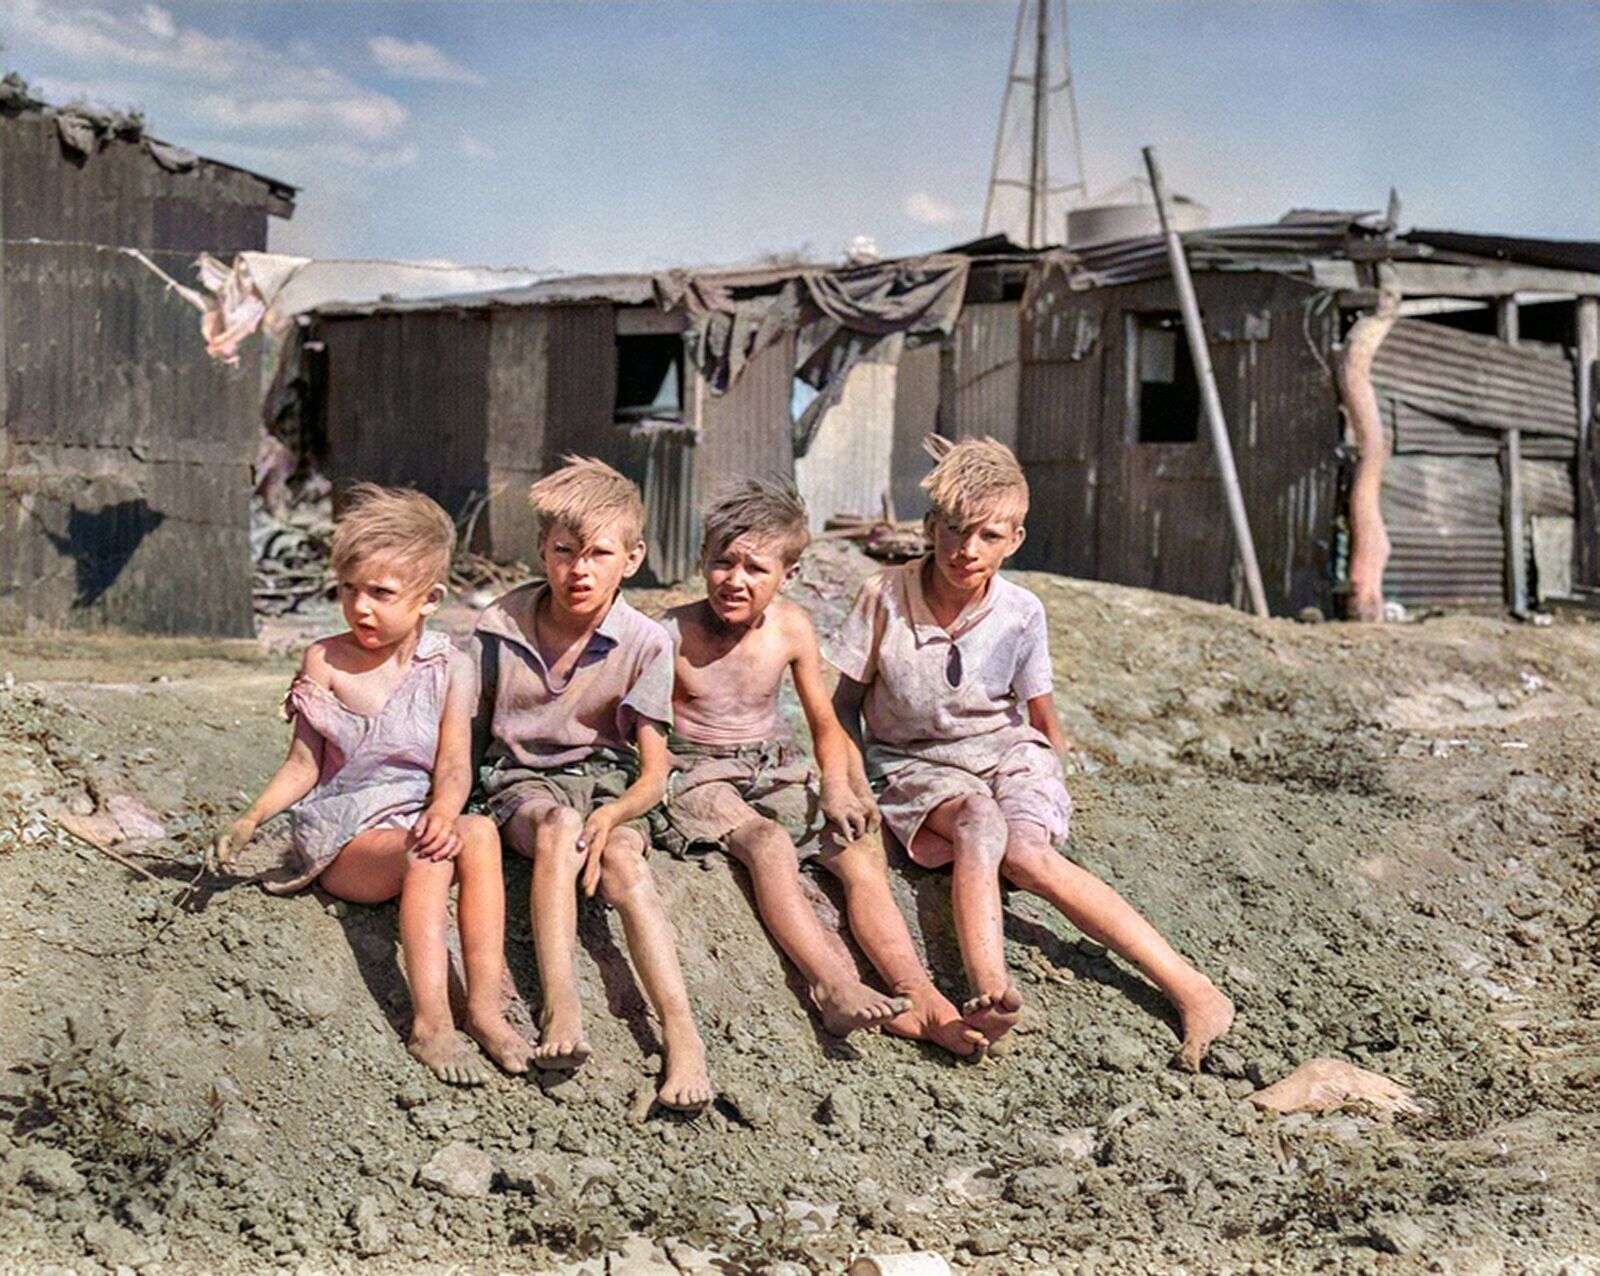 1937 DEPRESSION ERA CHILDREN in OKLAHOLMA Colorized 8.5x11 PHOTO